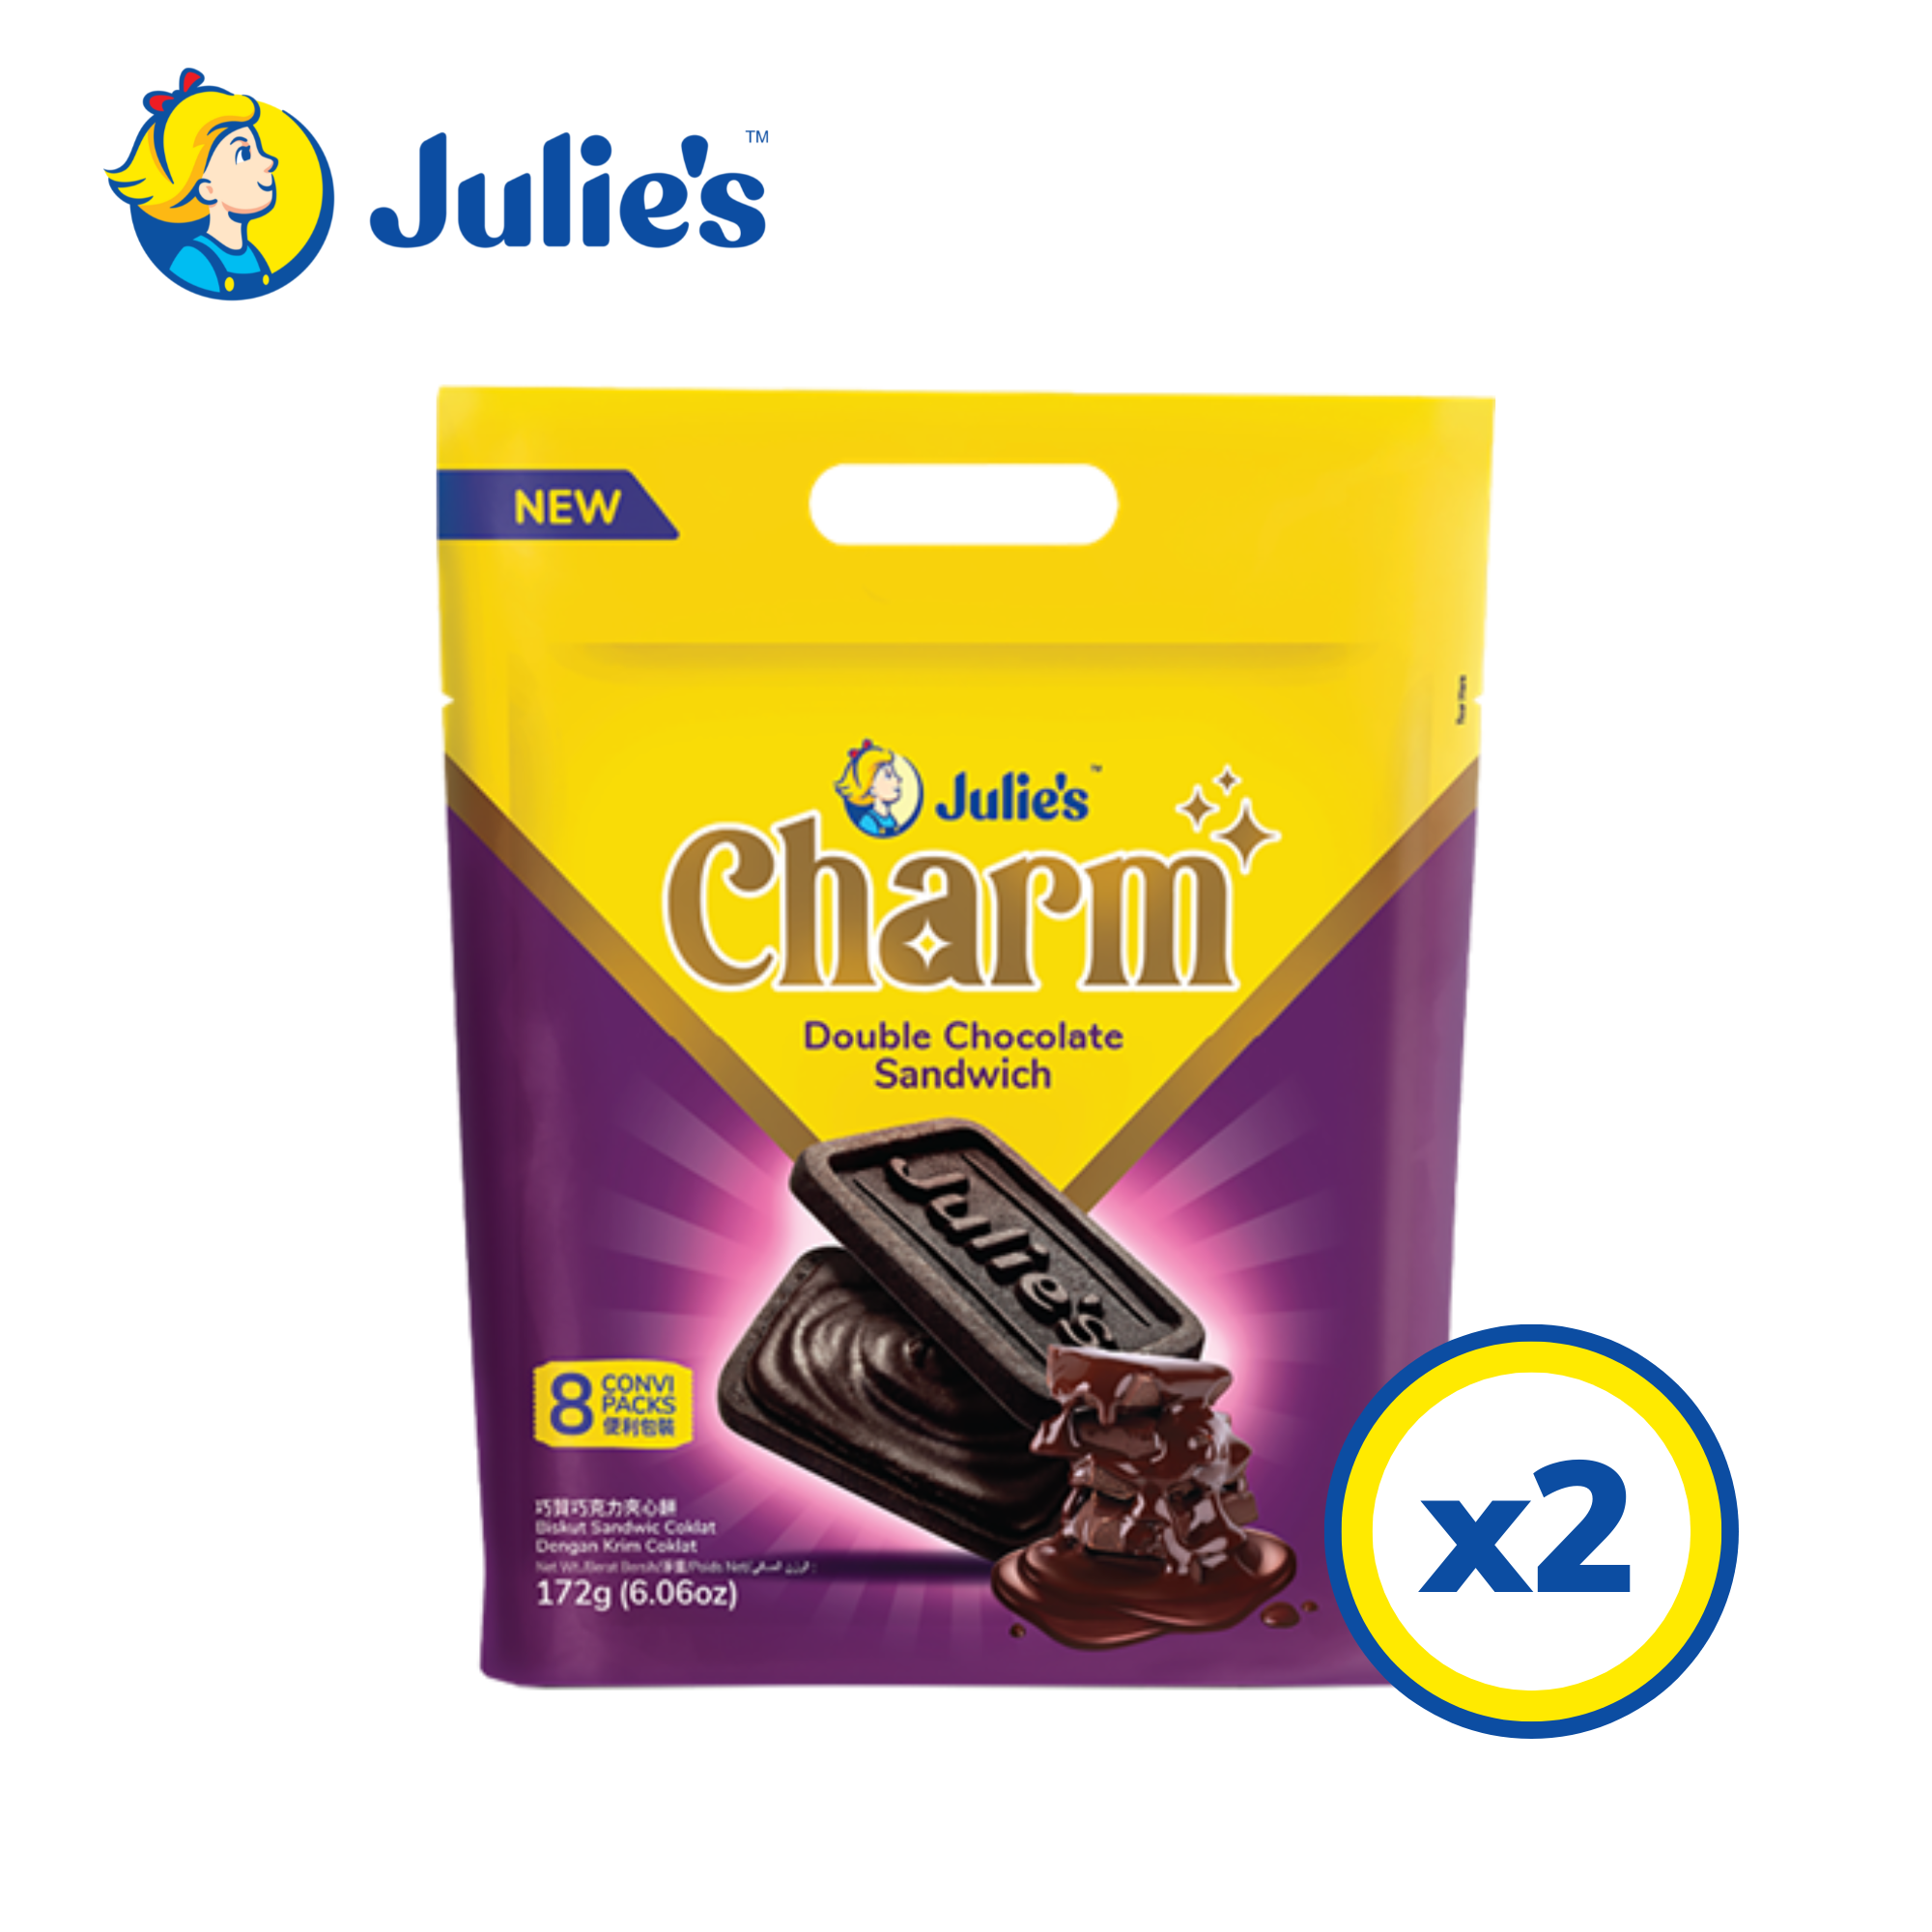 Julie's Charm Biscuit Premium Bundle